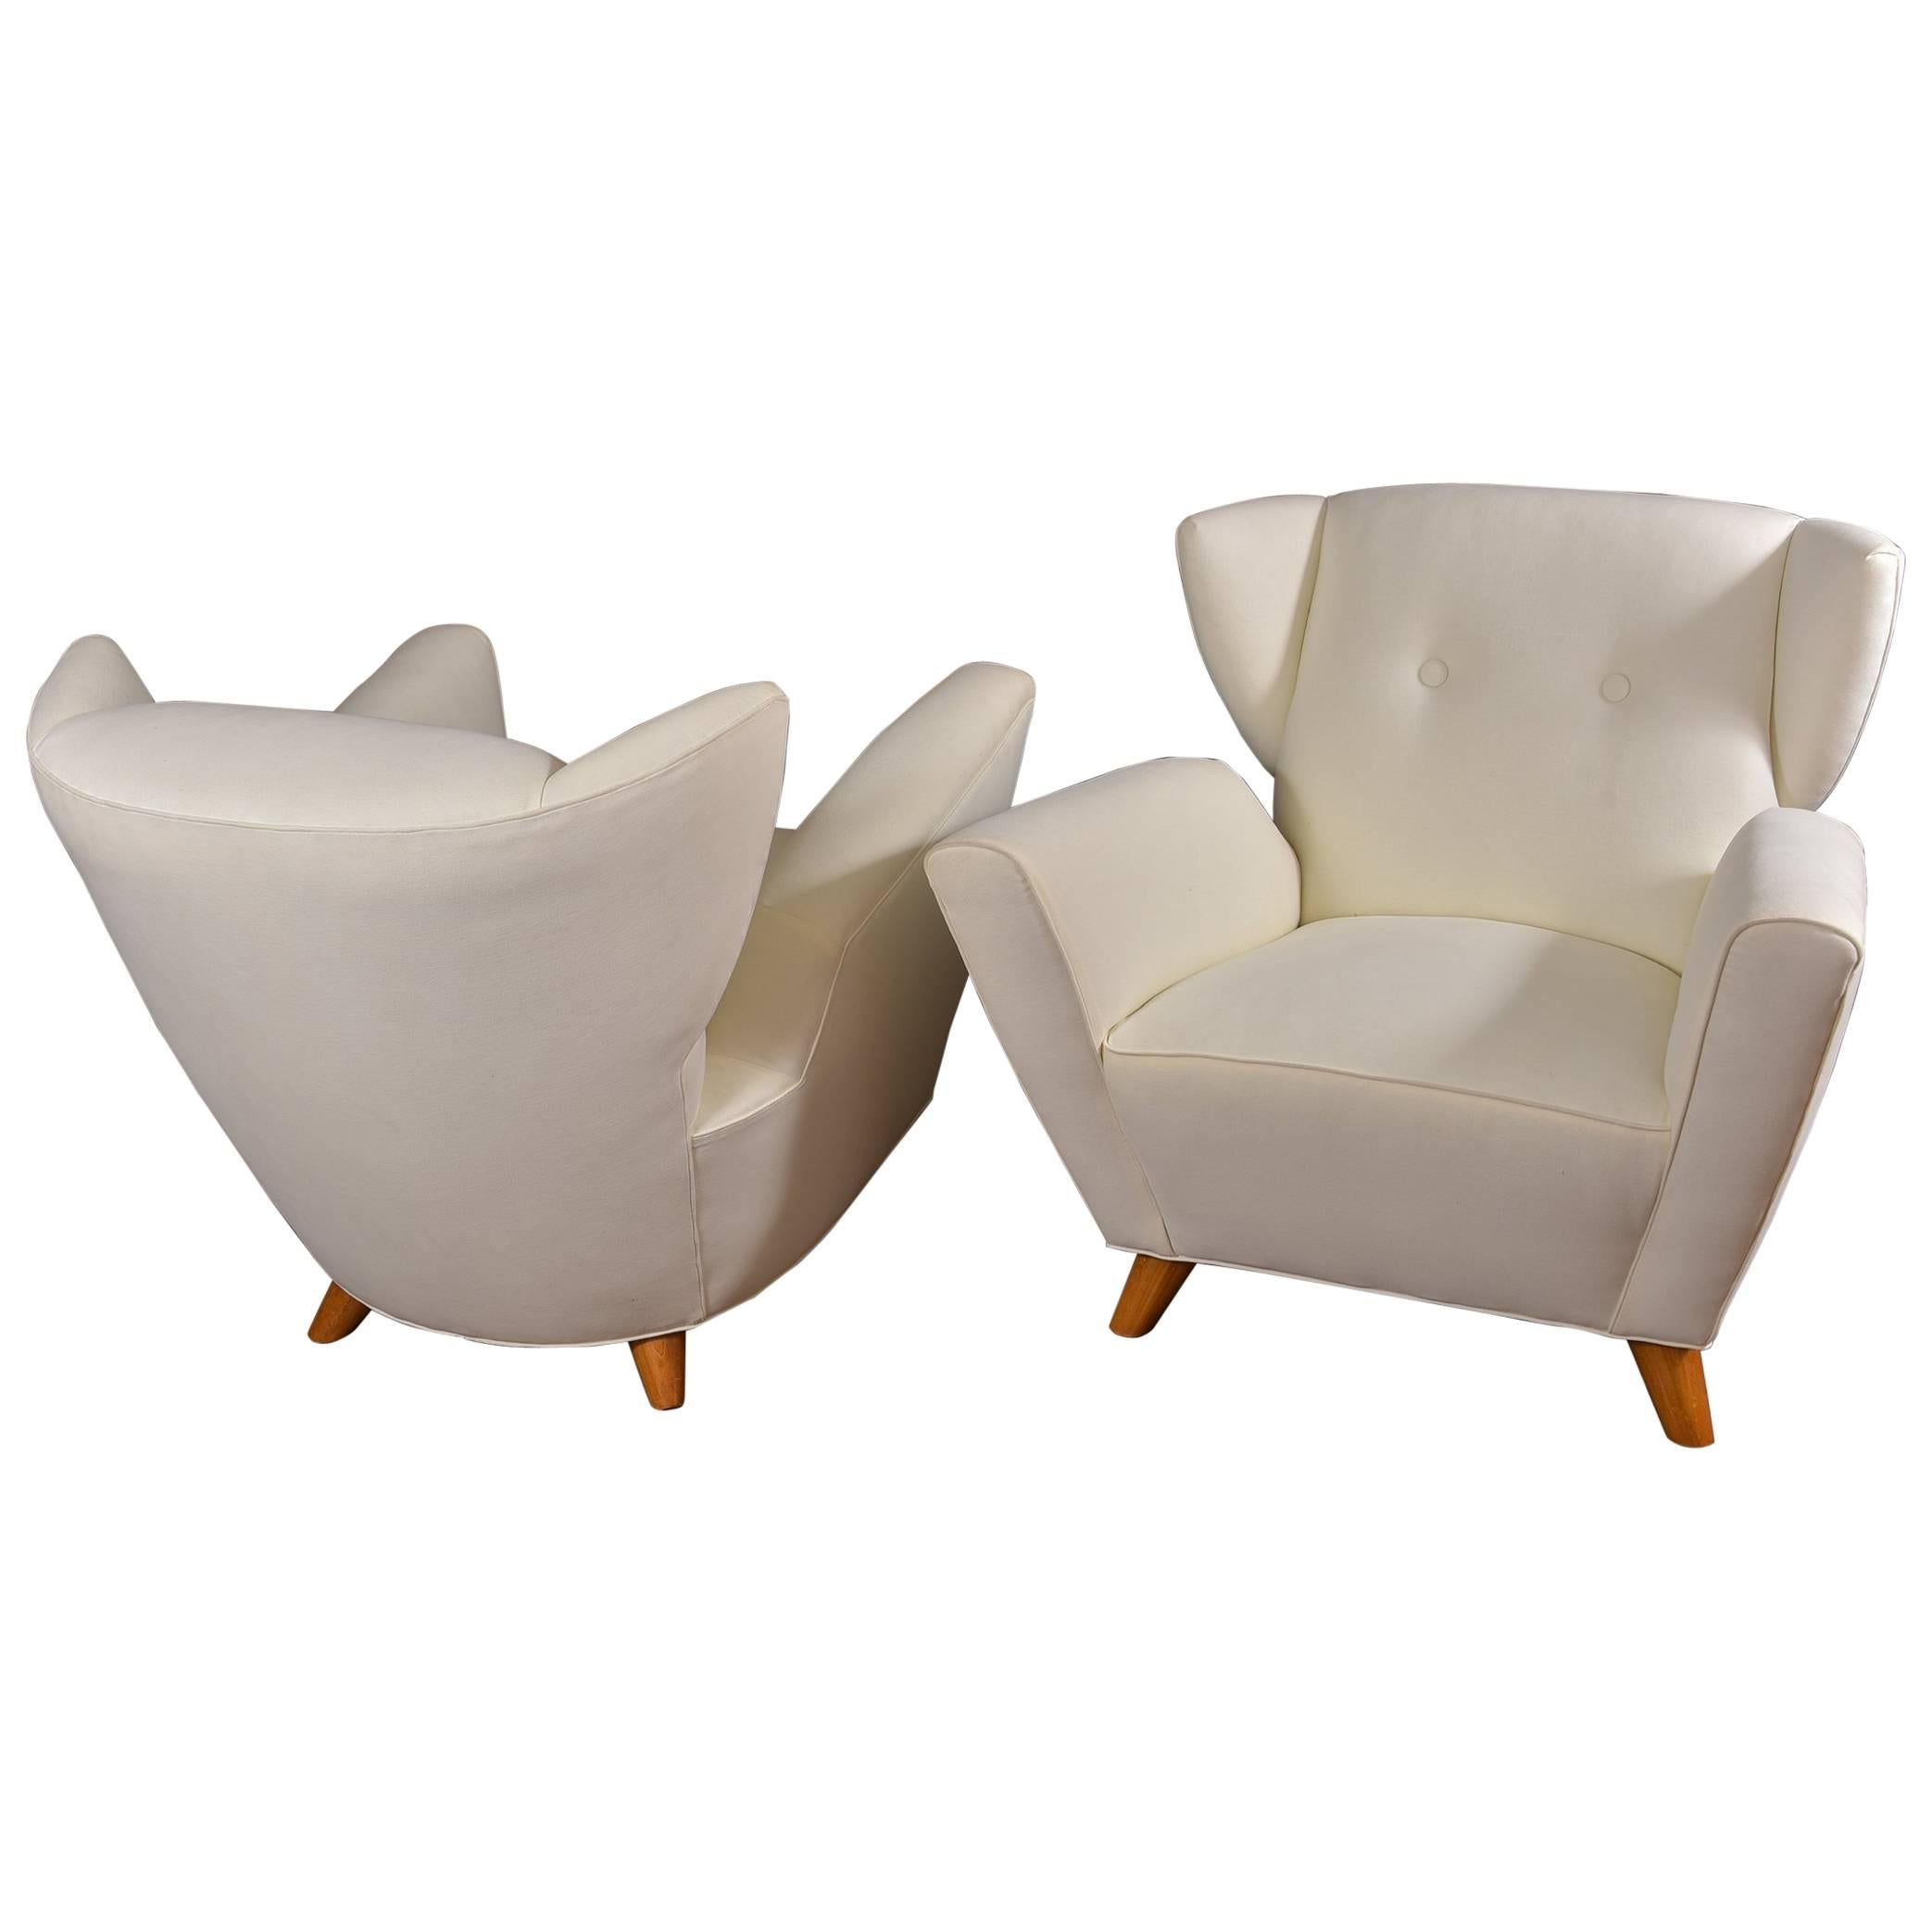 Pair of Vintage Italian Chairs